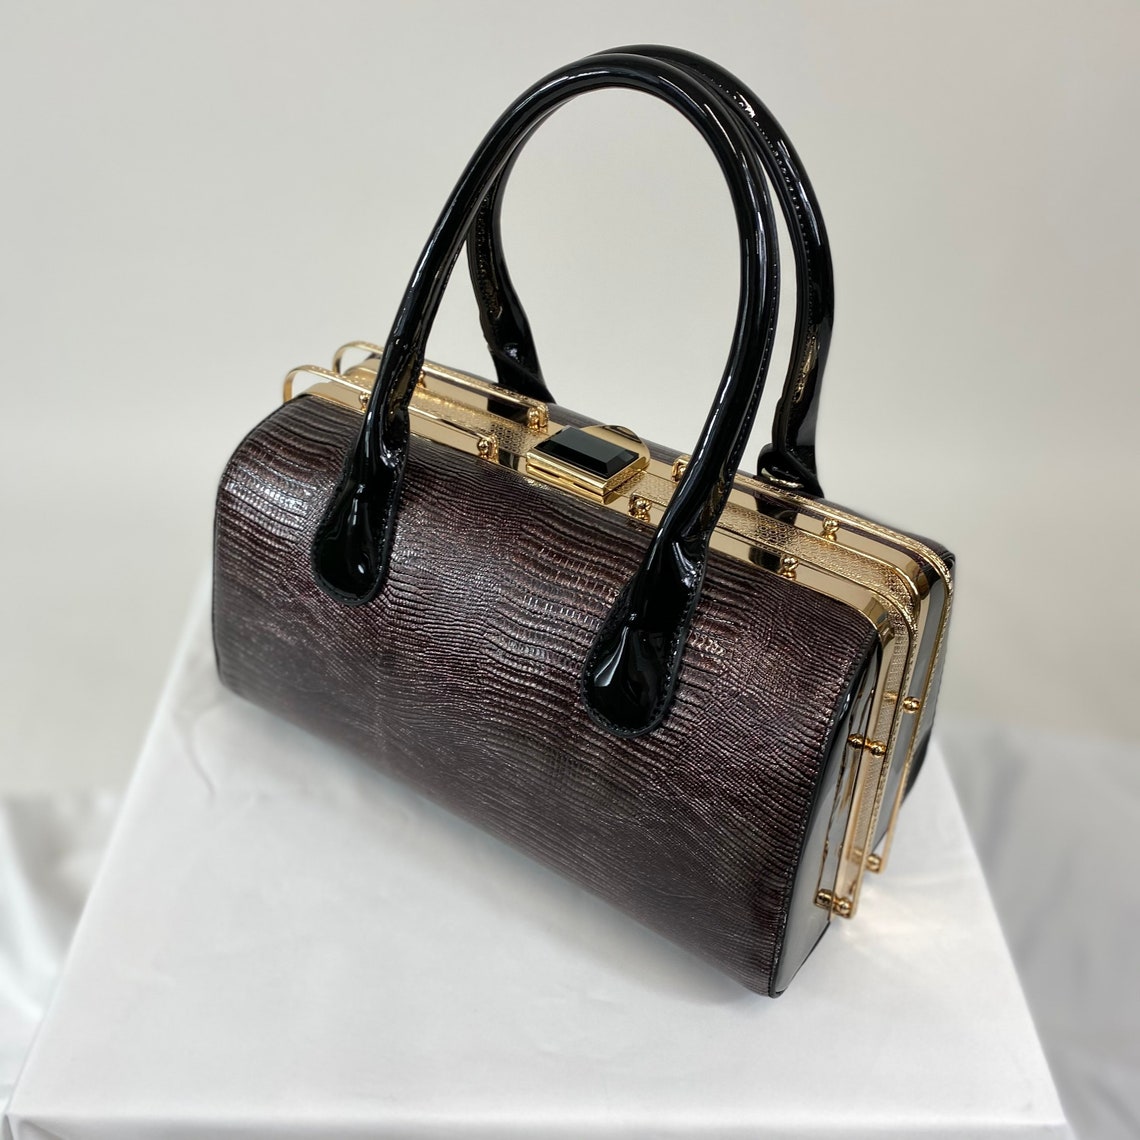 Classic Hollie Handbag in Black Copper Vintage Inspired | Etsy